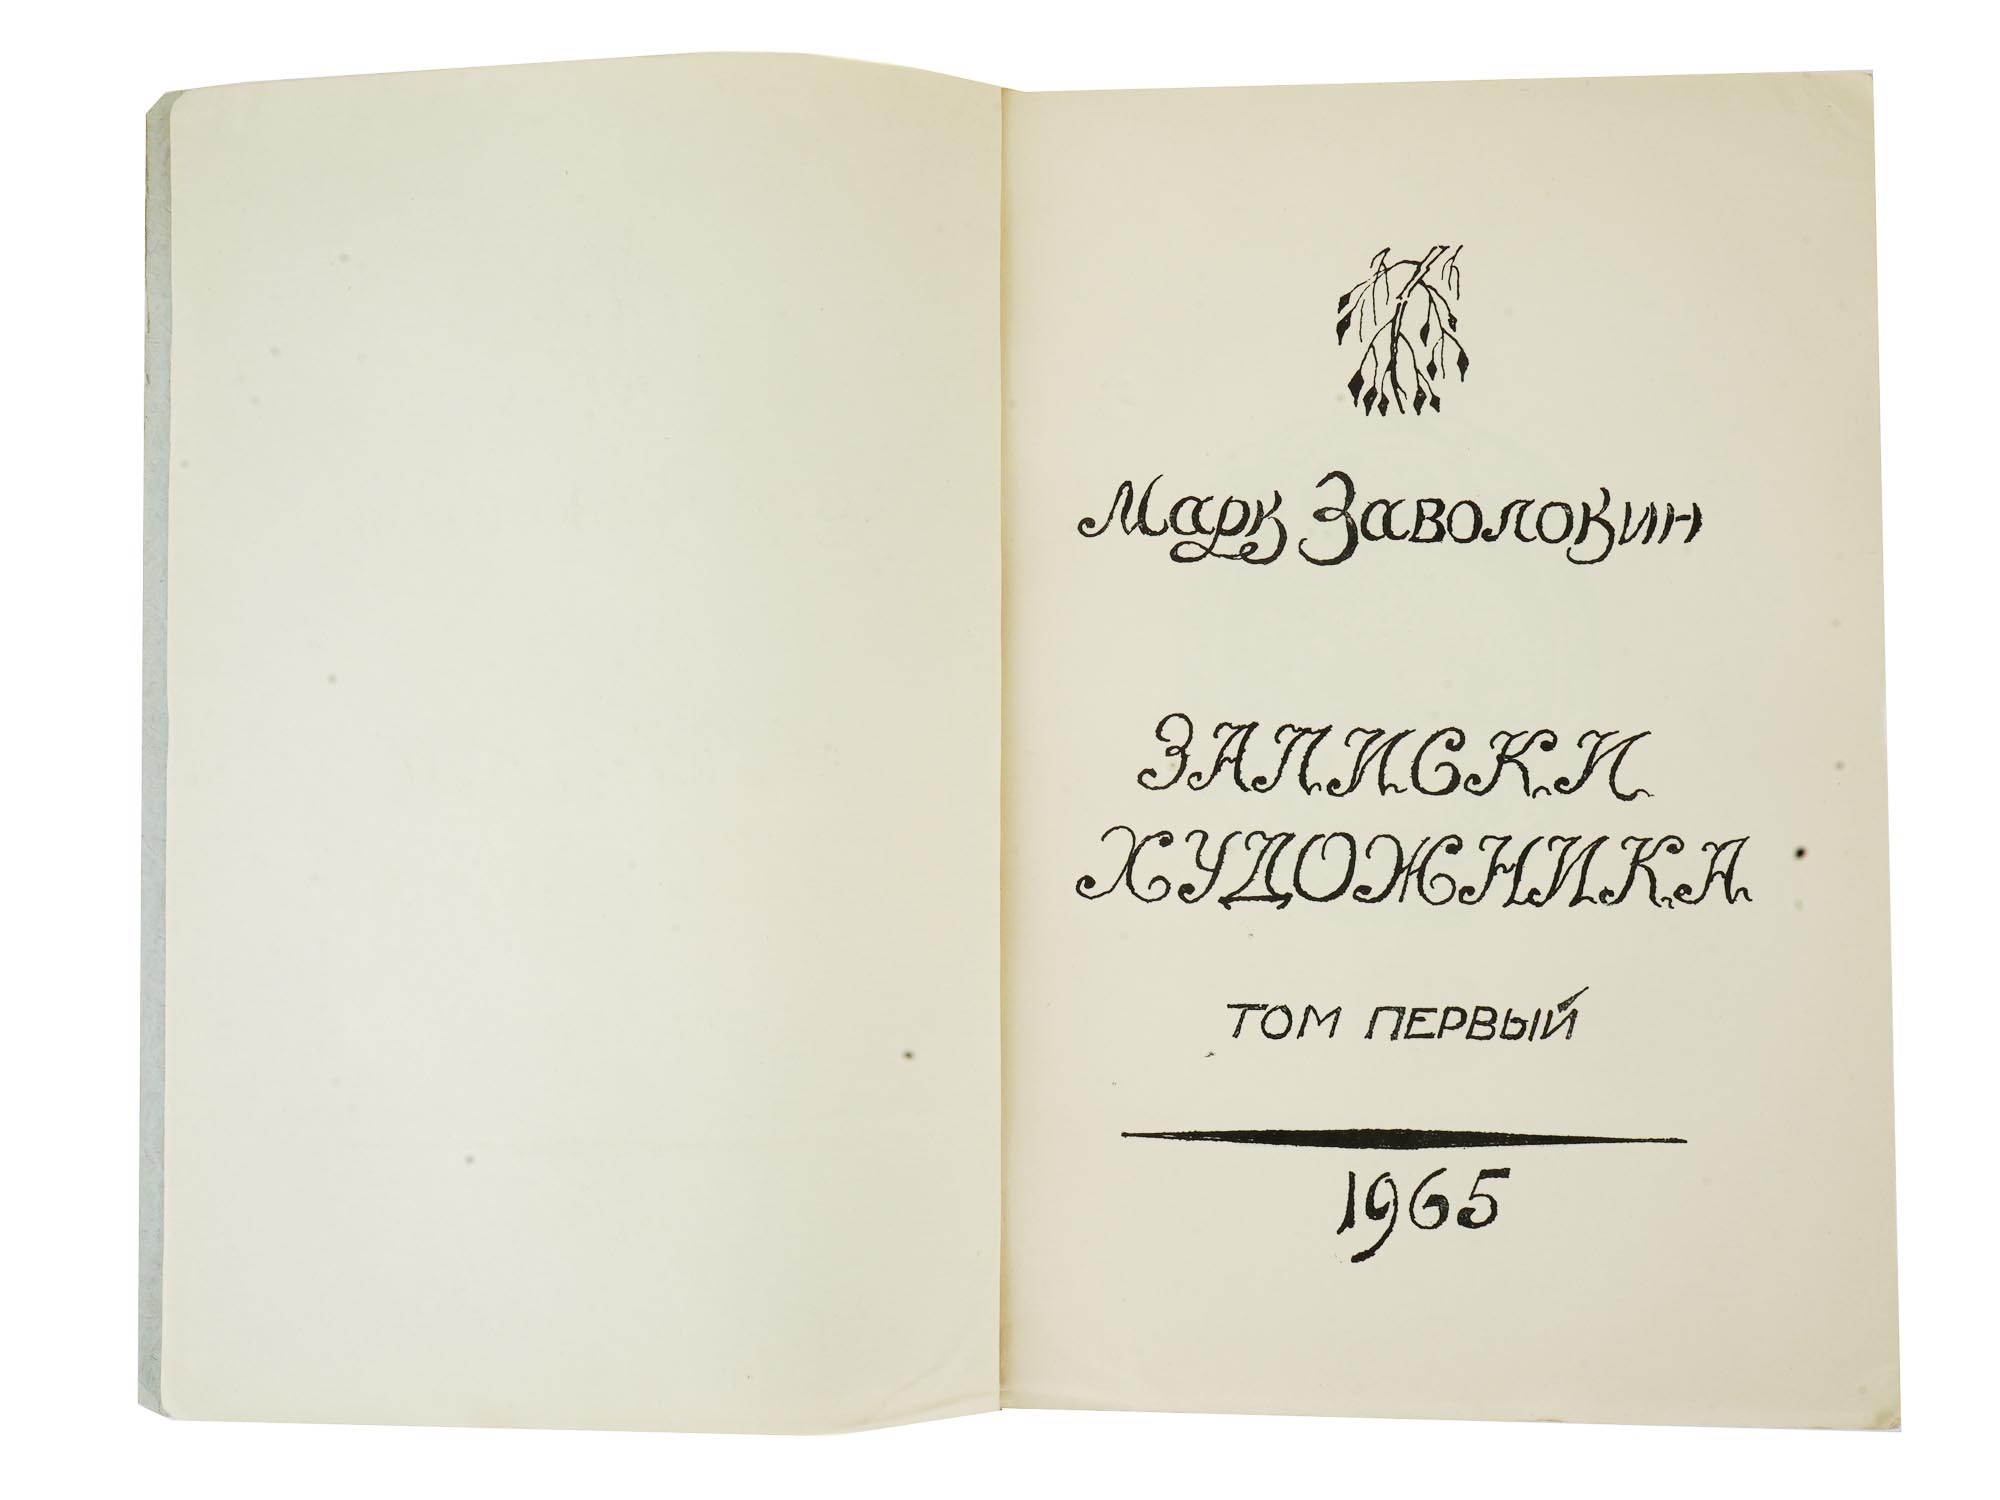 RUSSIAN BOOKS MARK ZAVOLOKIN 2 VOL NOTES OF ARTIST PIC-3